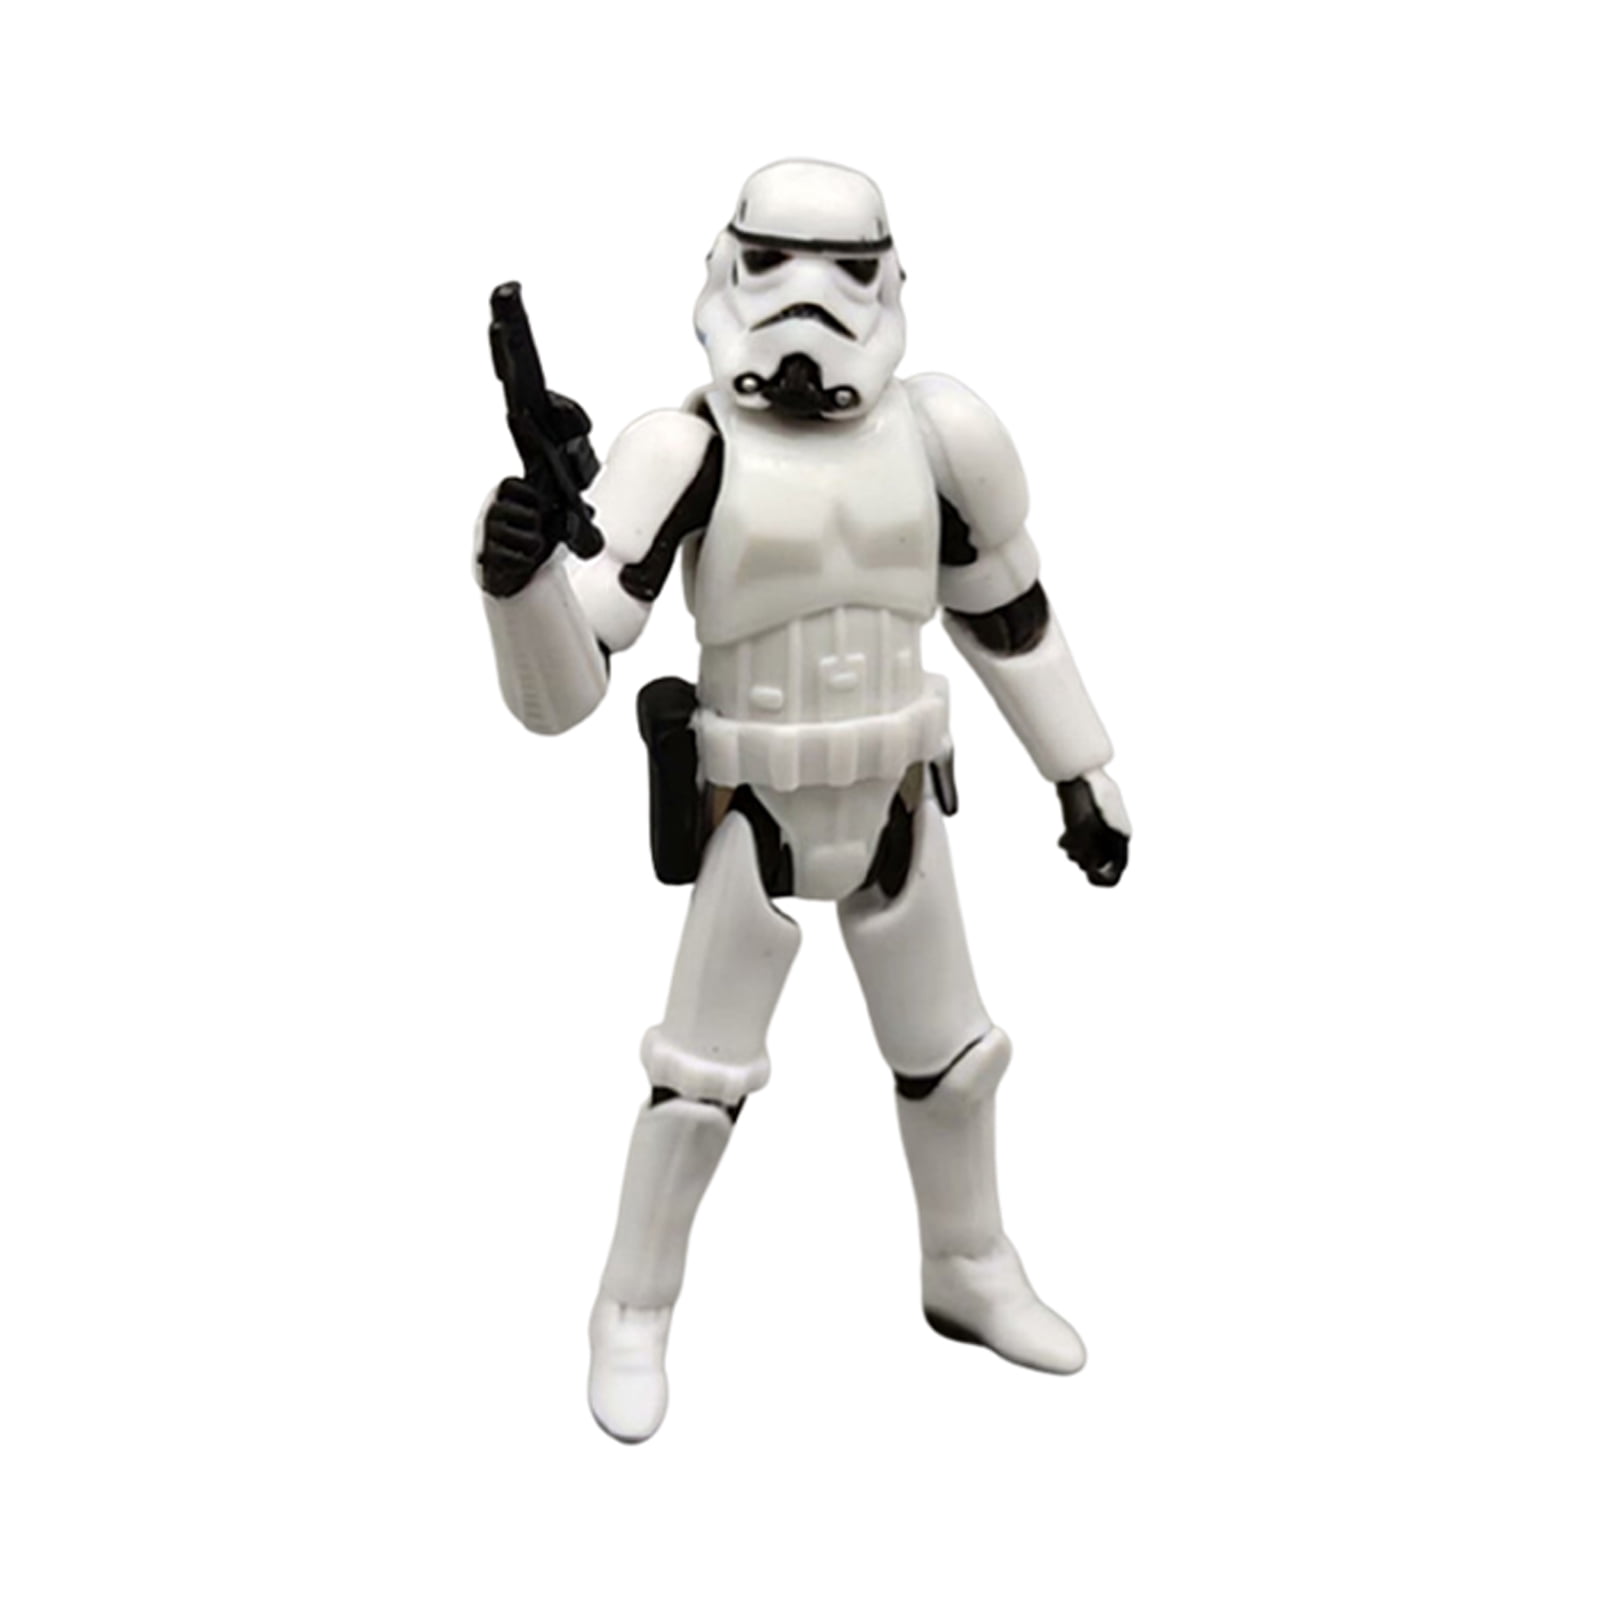 Playskool Star Wars STORMTROOPER Strom Trooper Hasbro Action Figure Boy Toy Gift 